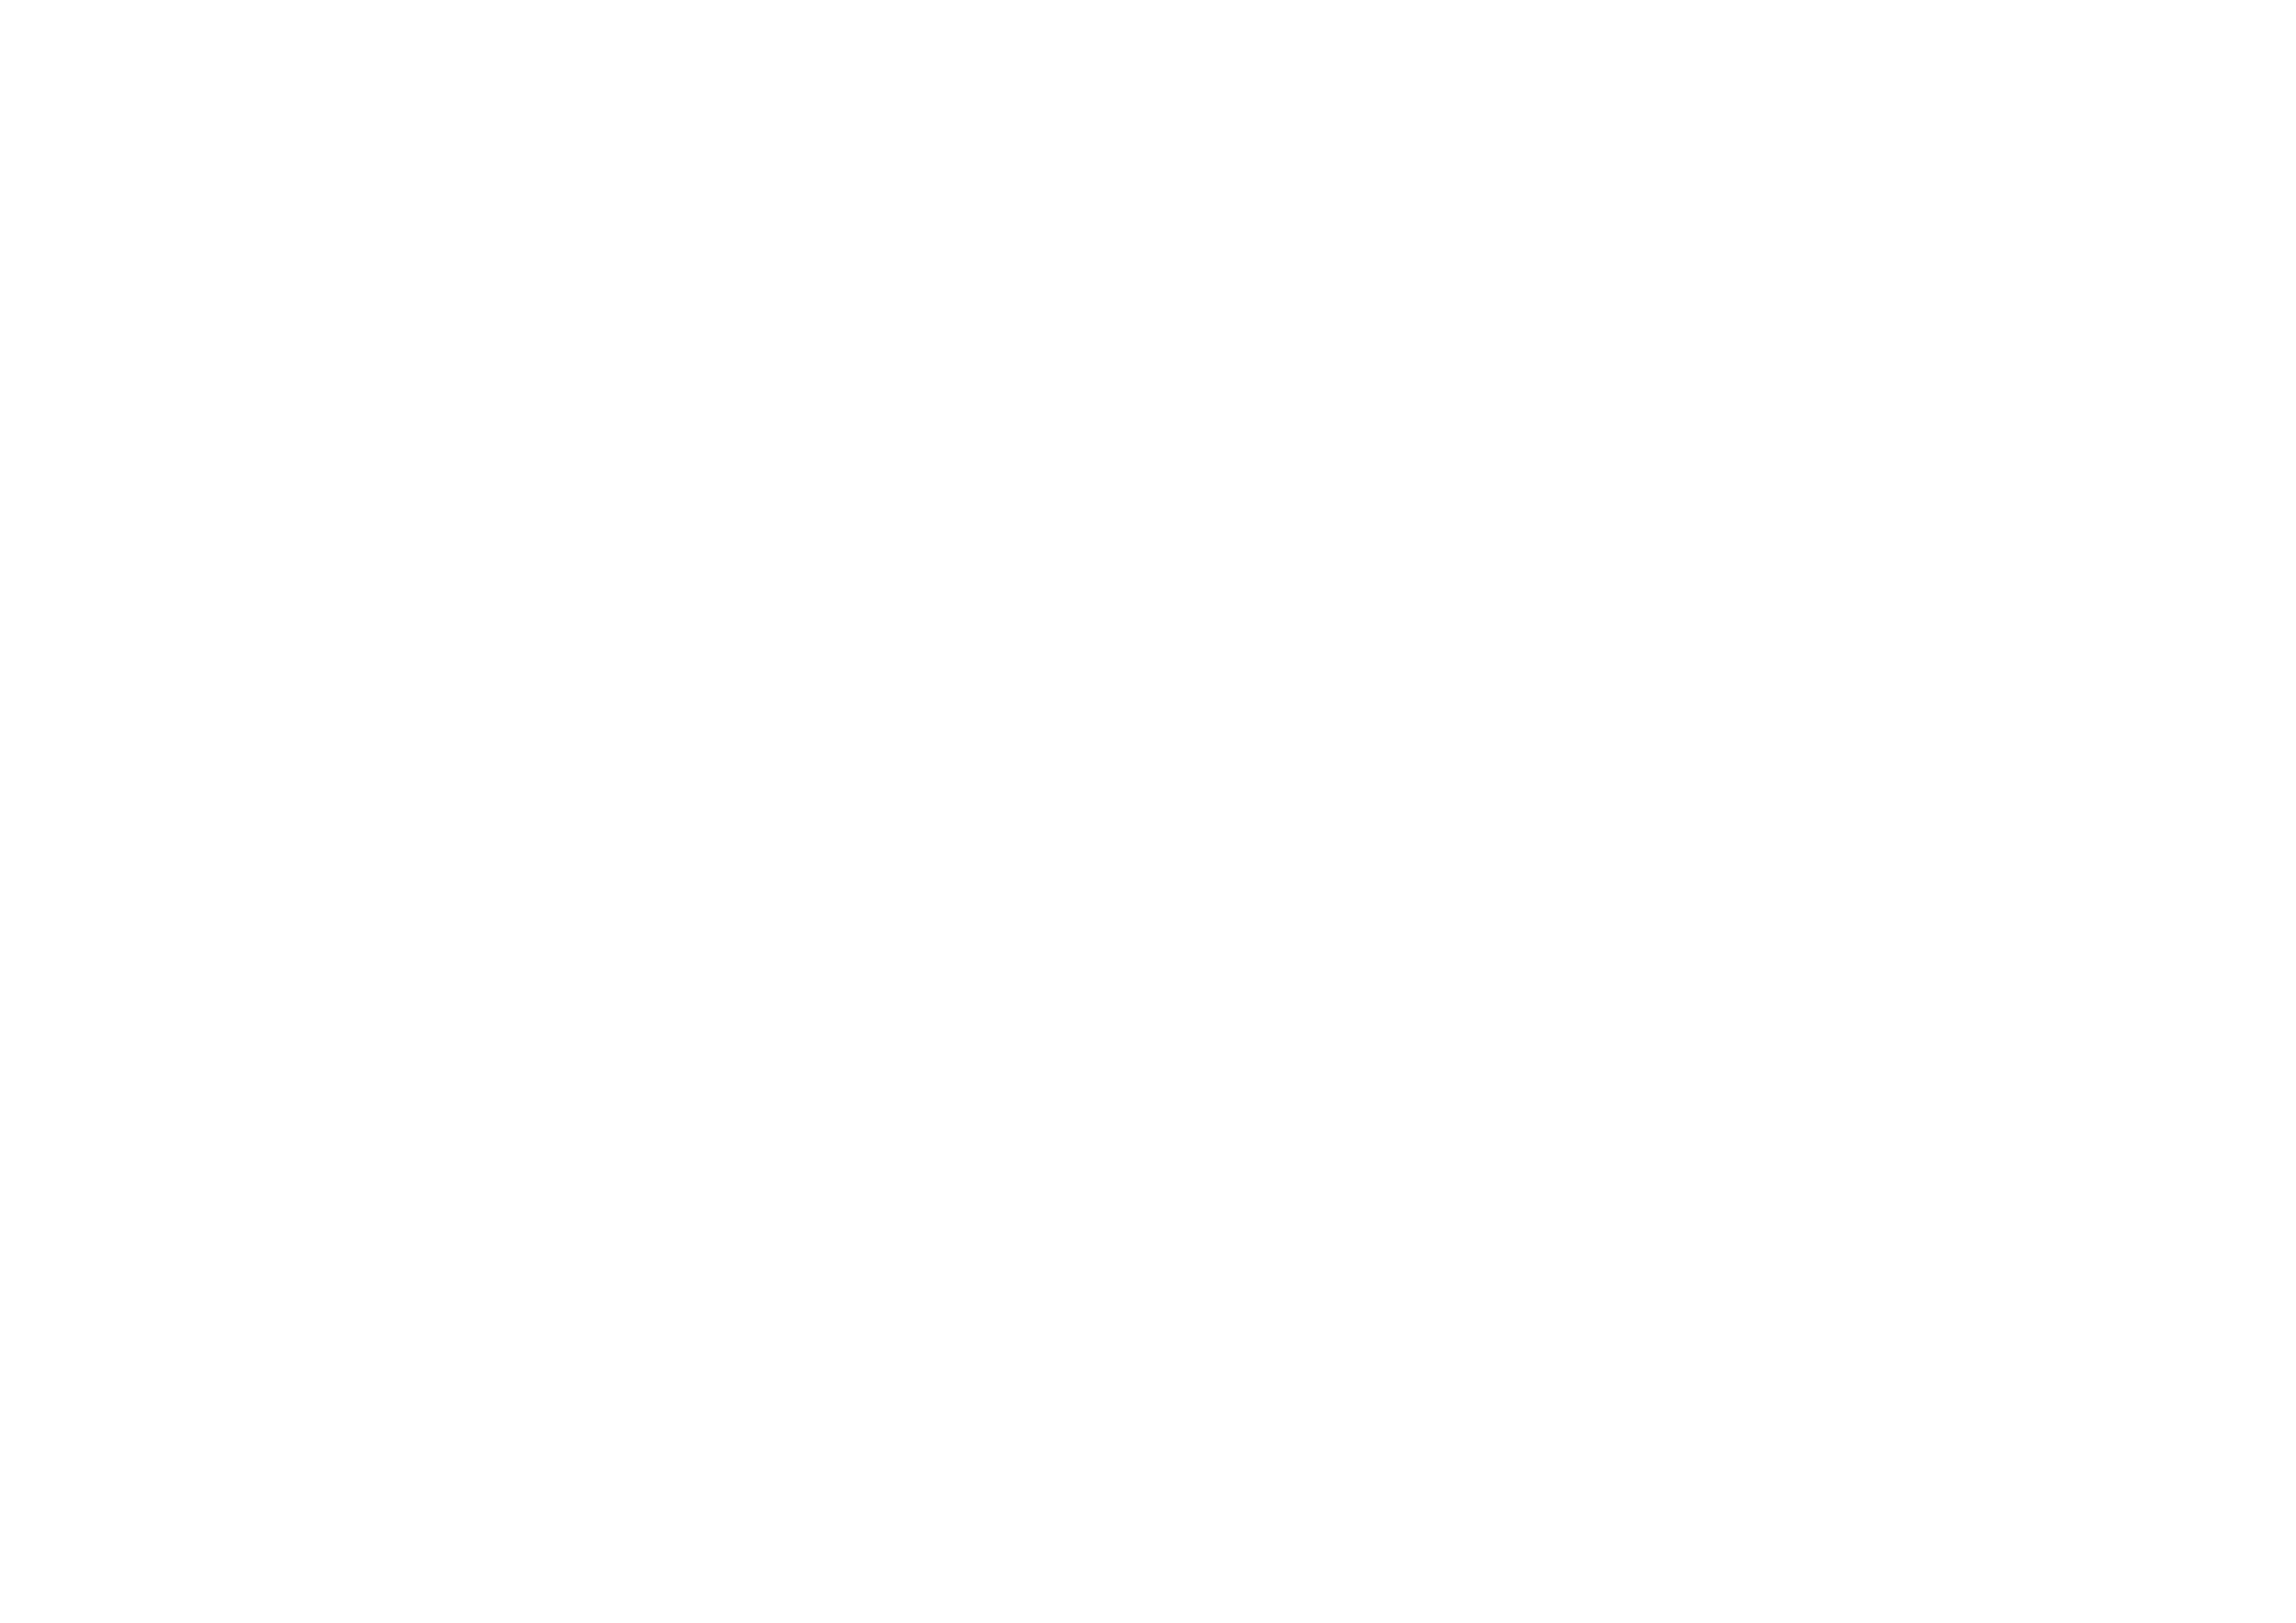 Seemi's Confections